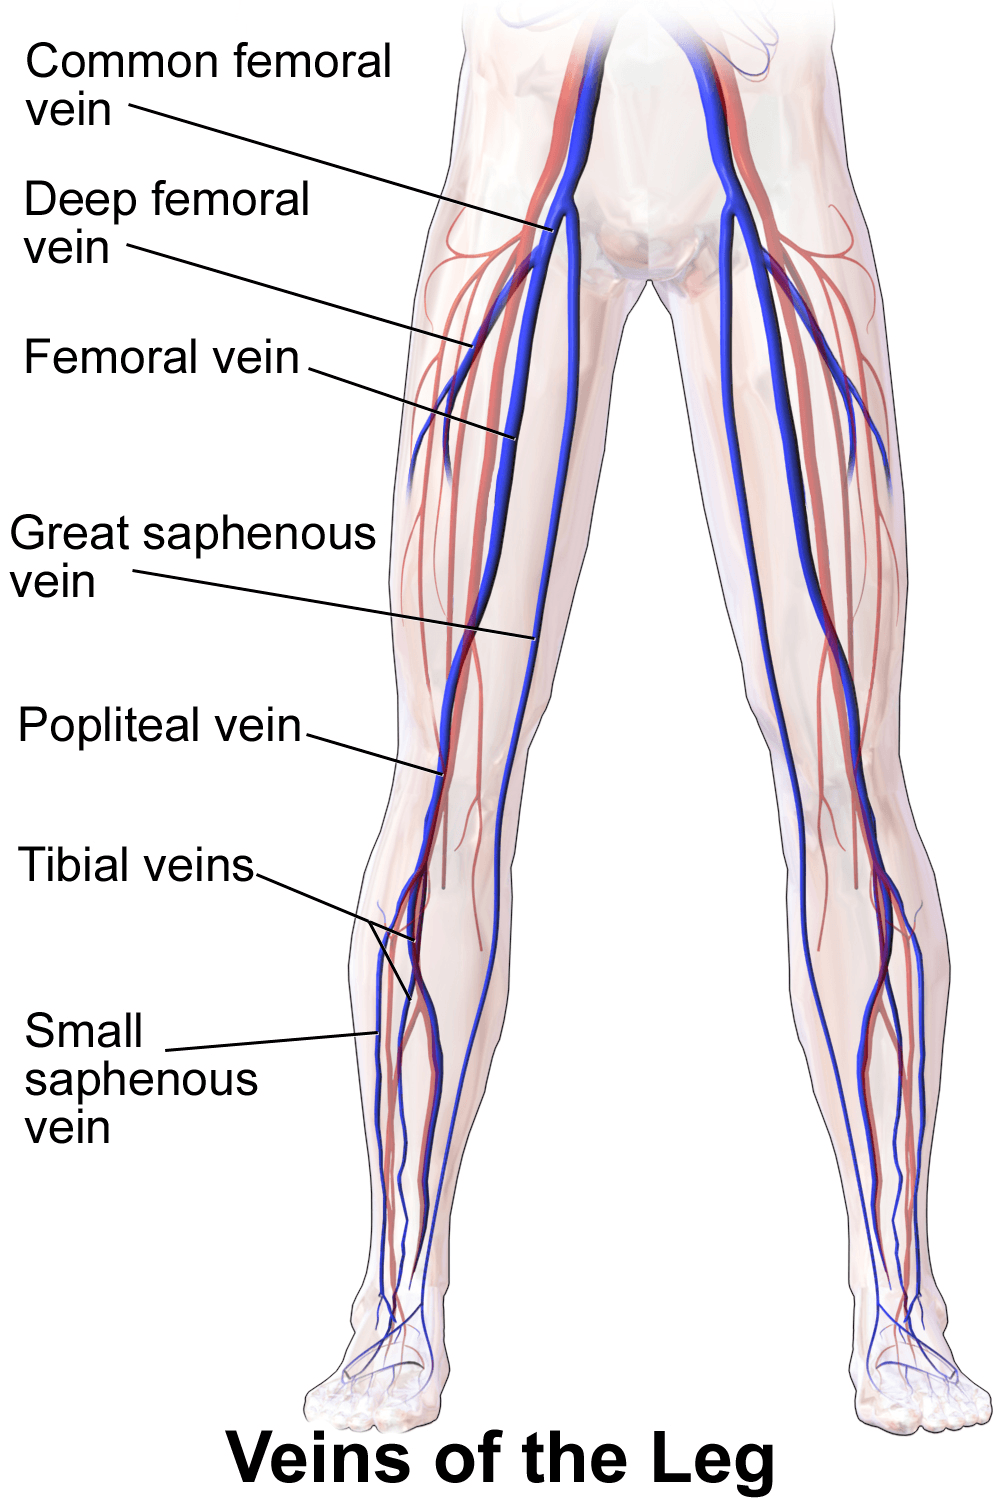 Veins of the leg